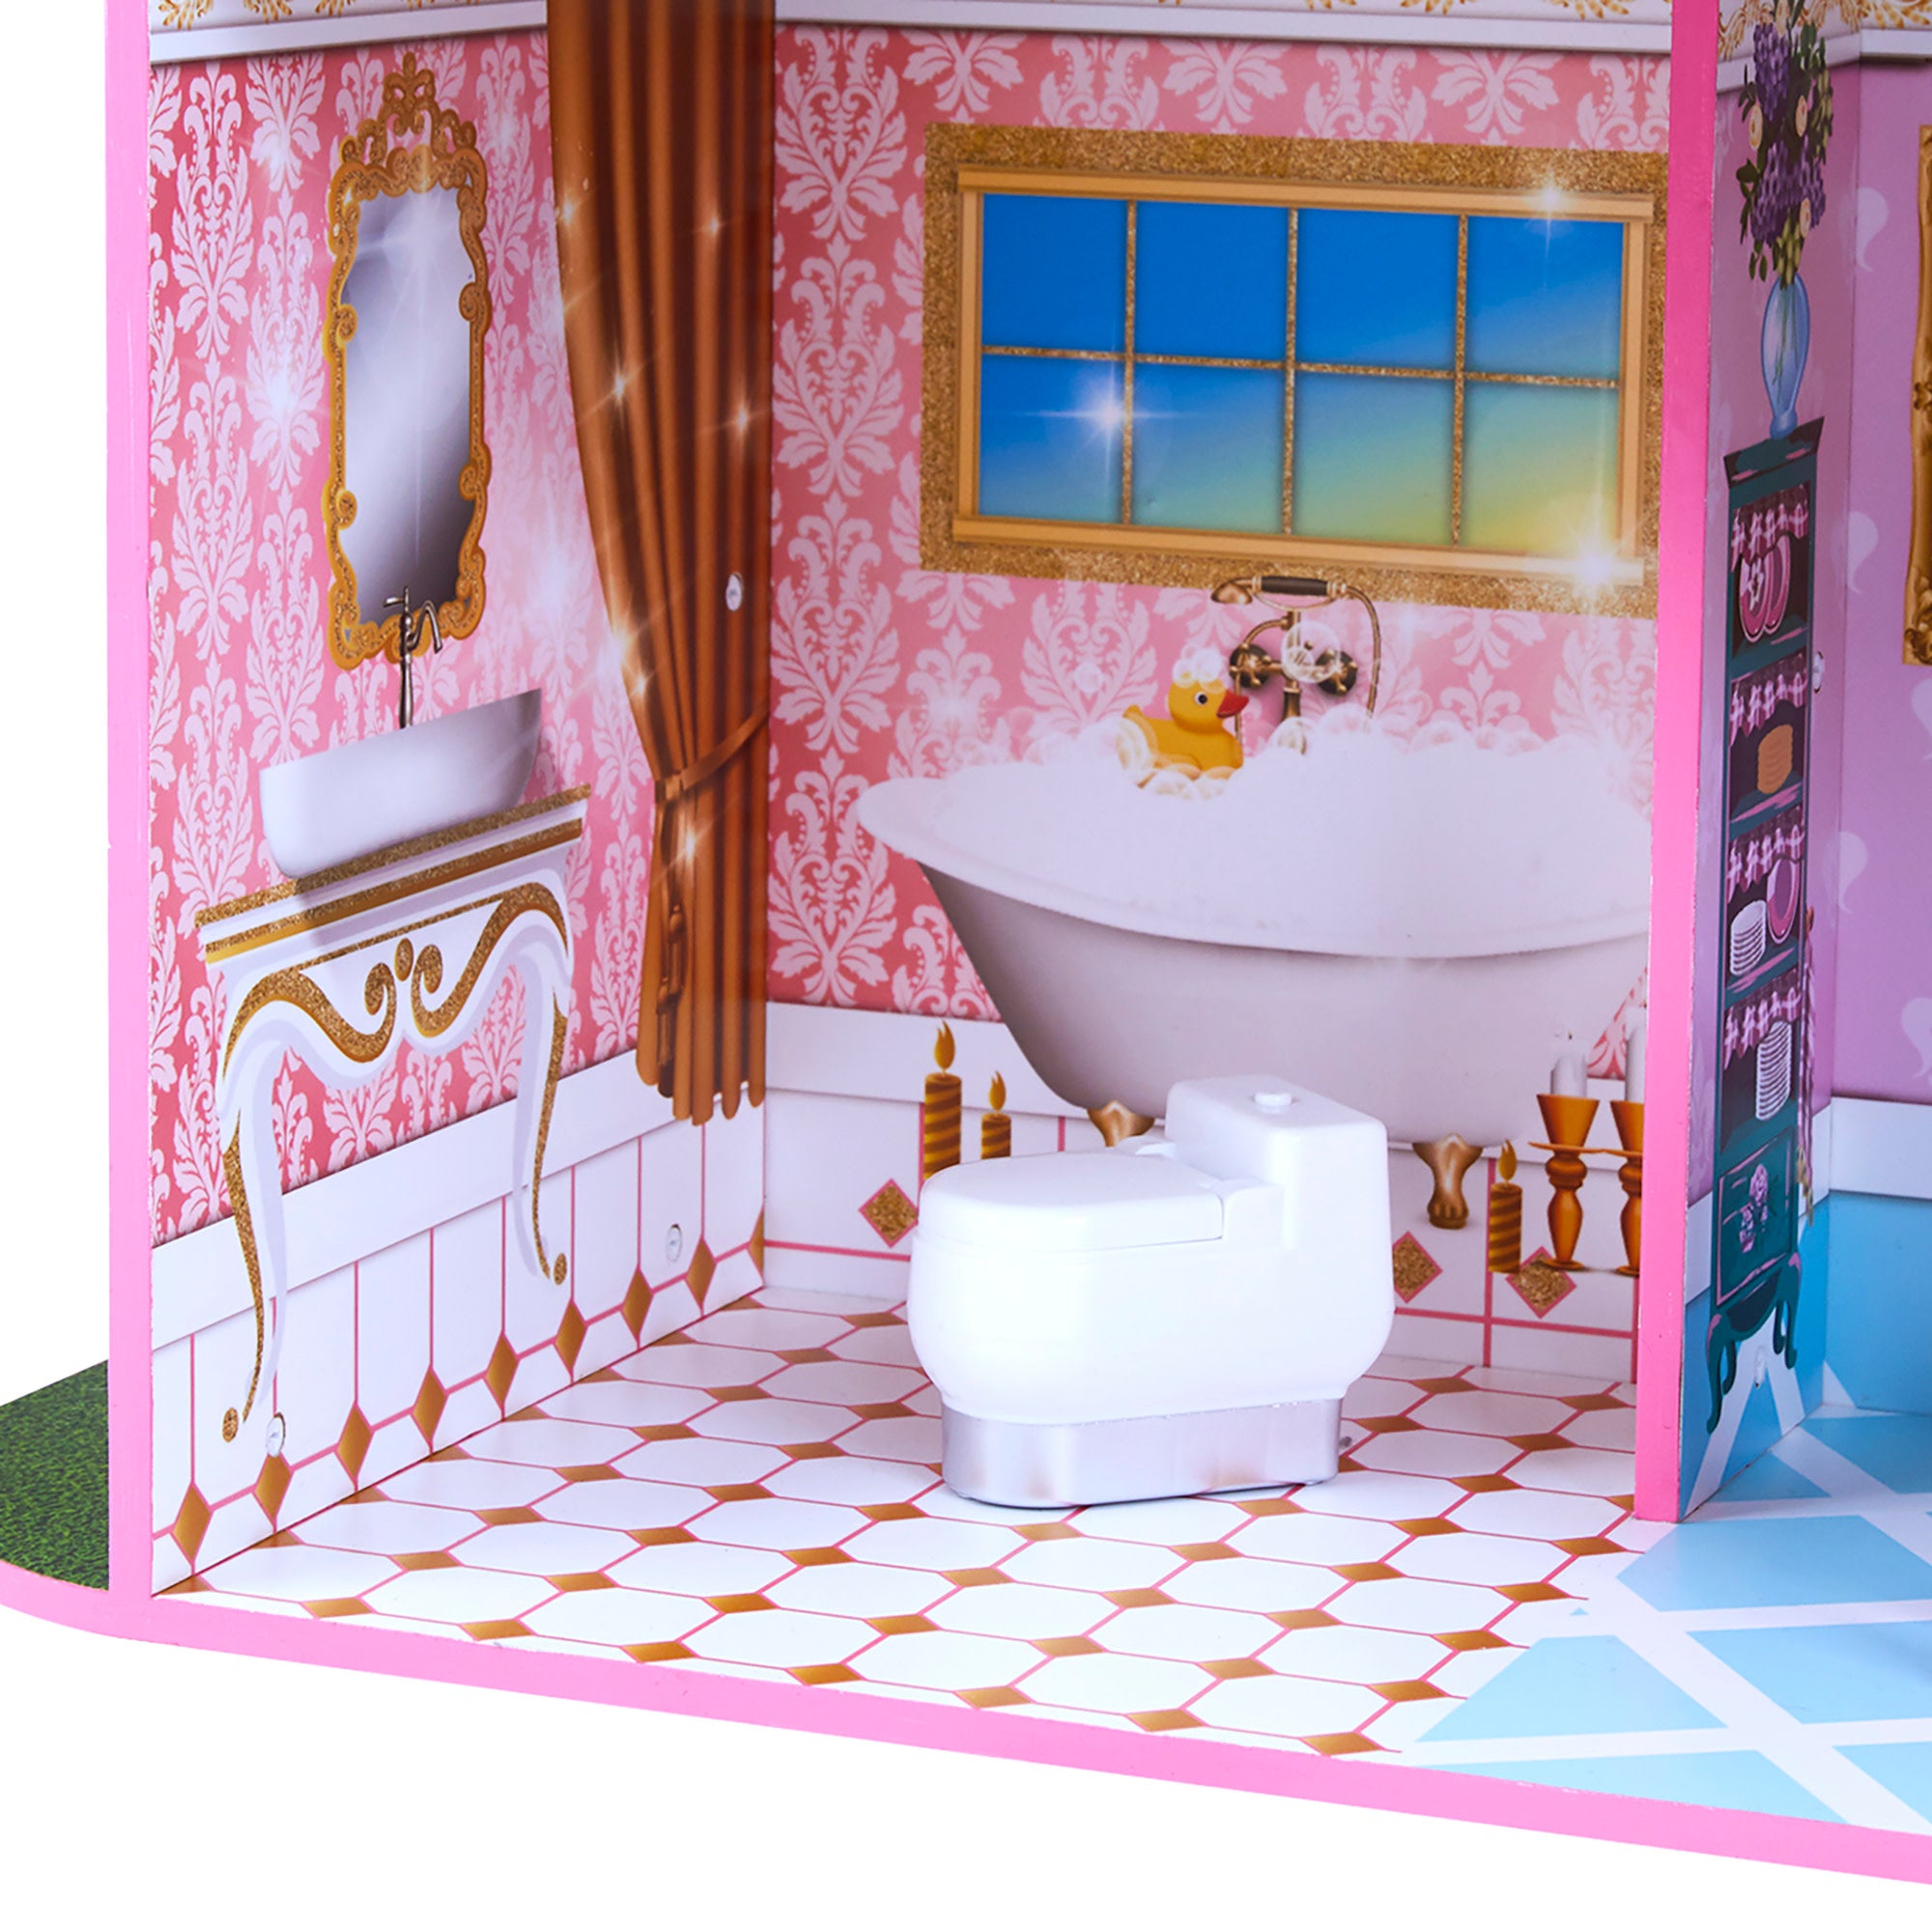 Olivia's Little World Furnished Castle Dollhouse for 12" Dolls, Multicolor